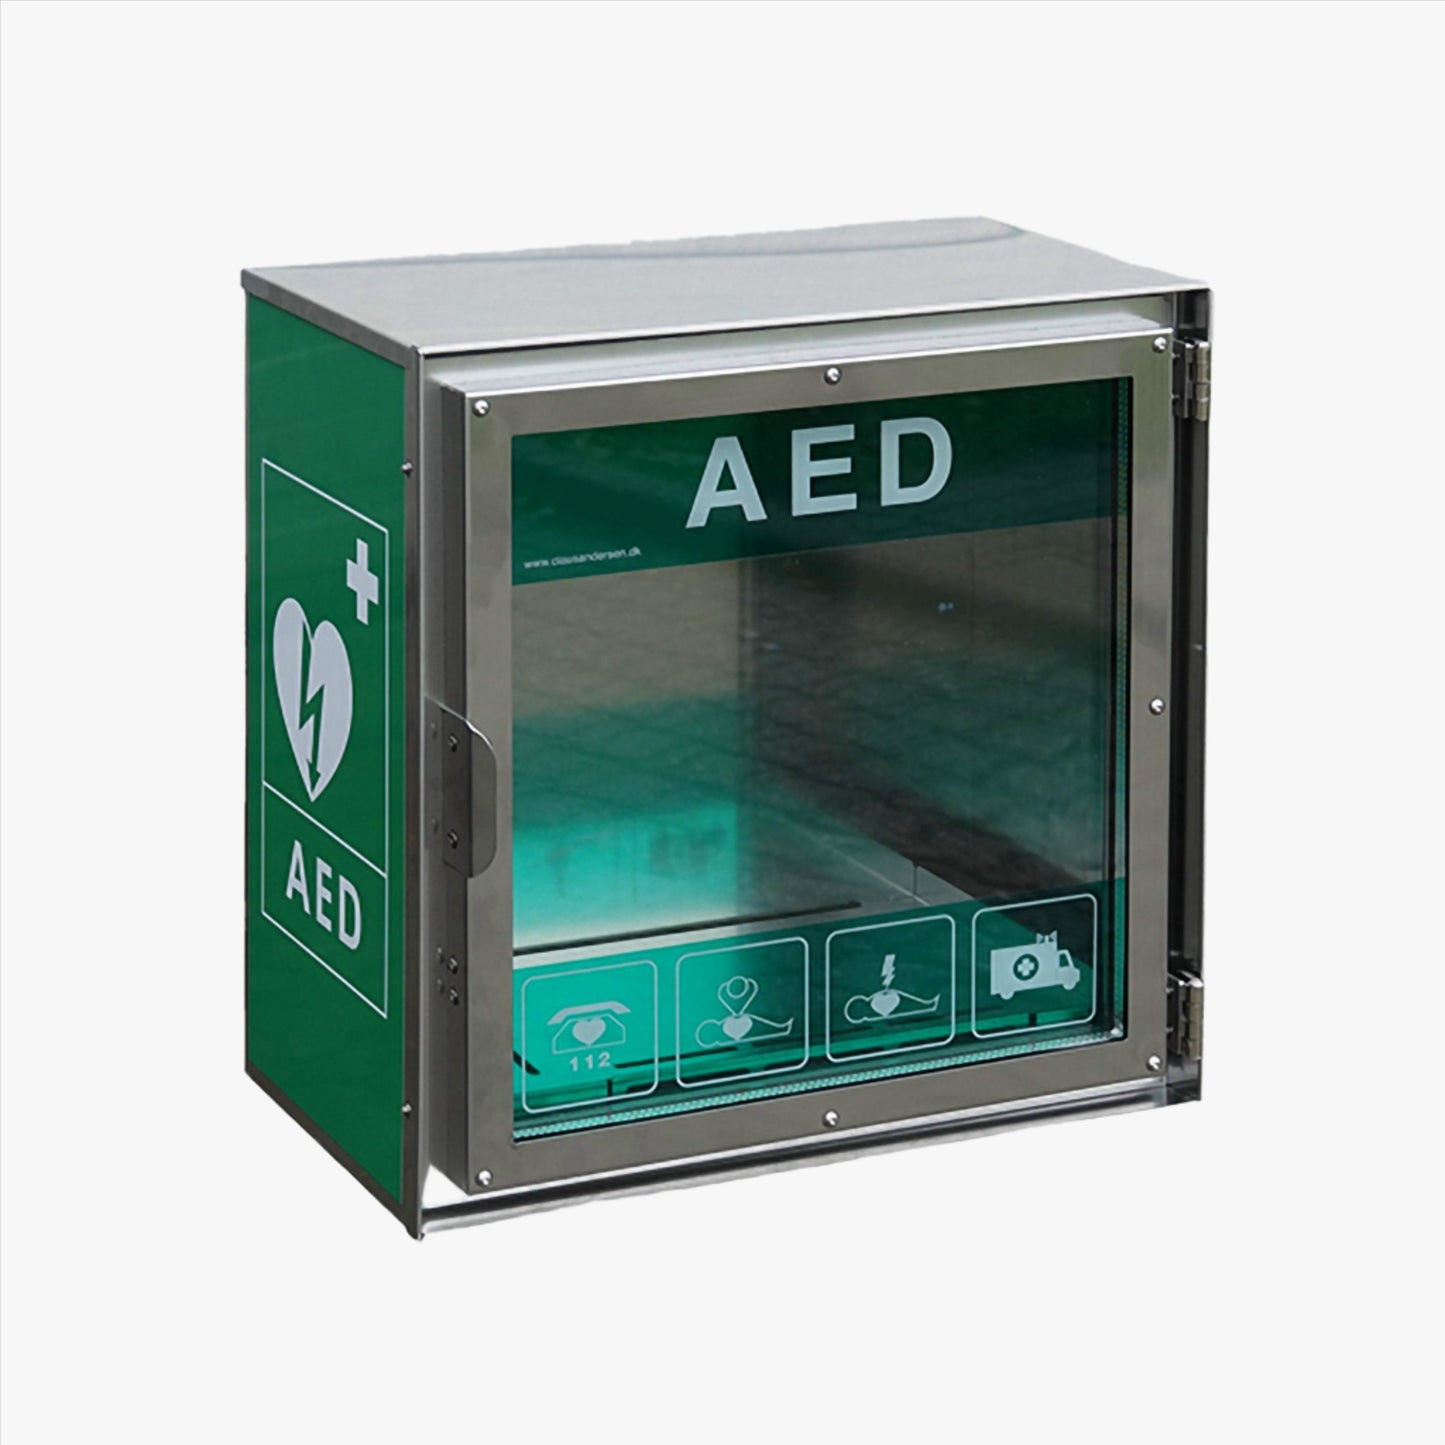 Cabinet defibrillator — heat (-20°C) and stainless steel